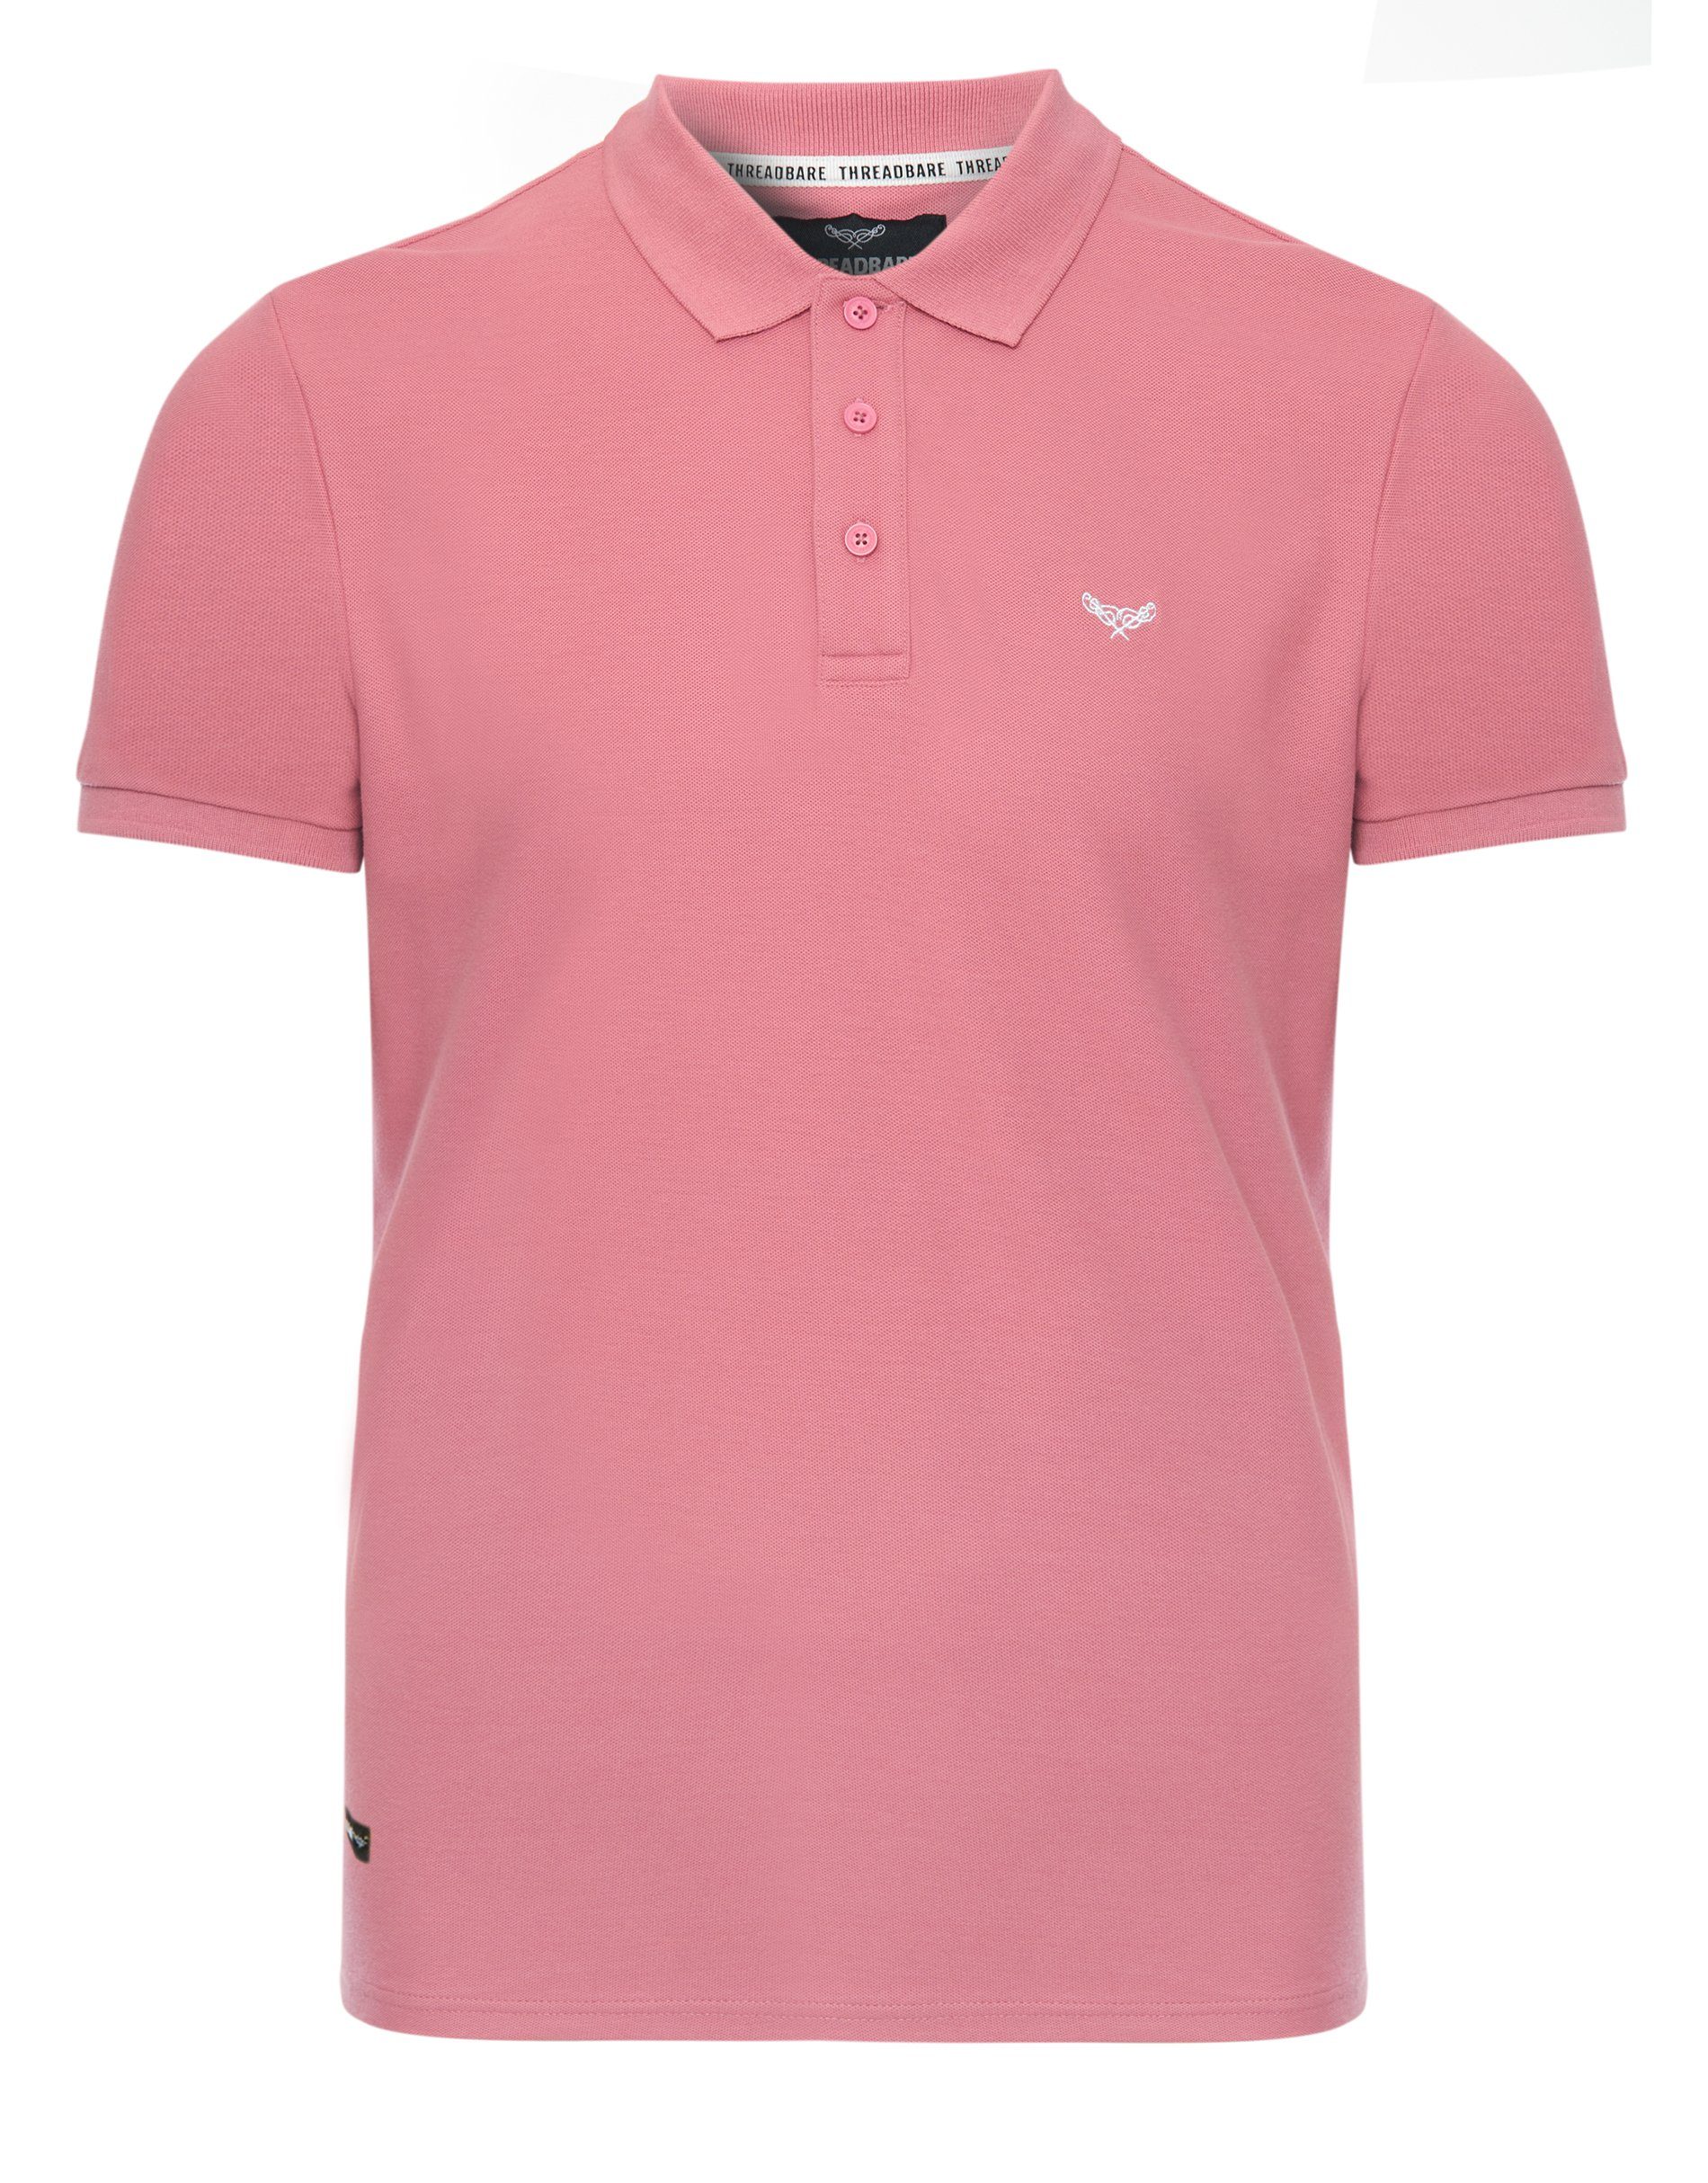 Regna Polo THB Poloshirt Threadbare Pink